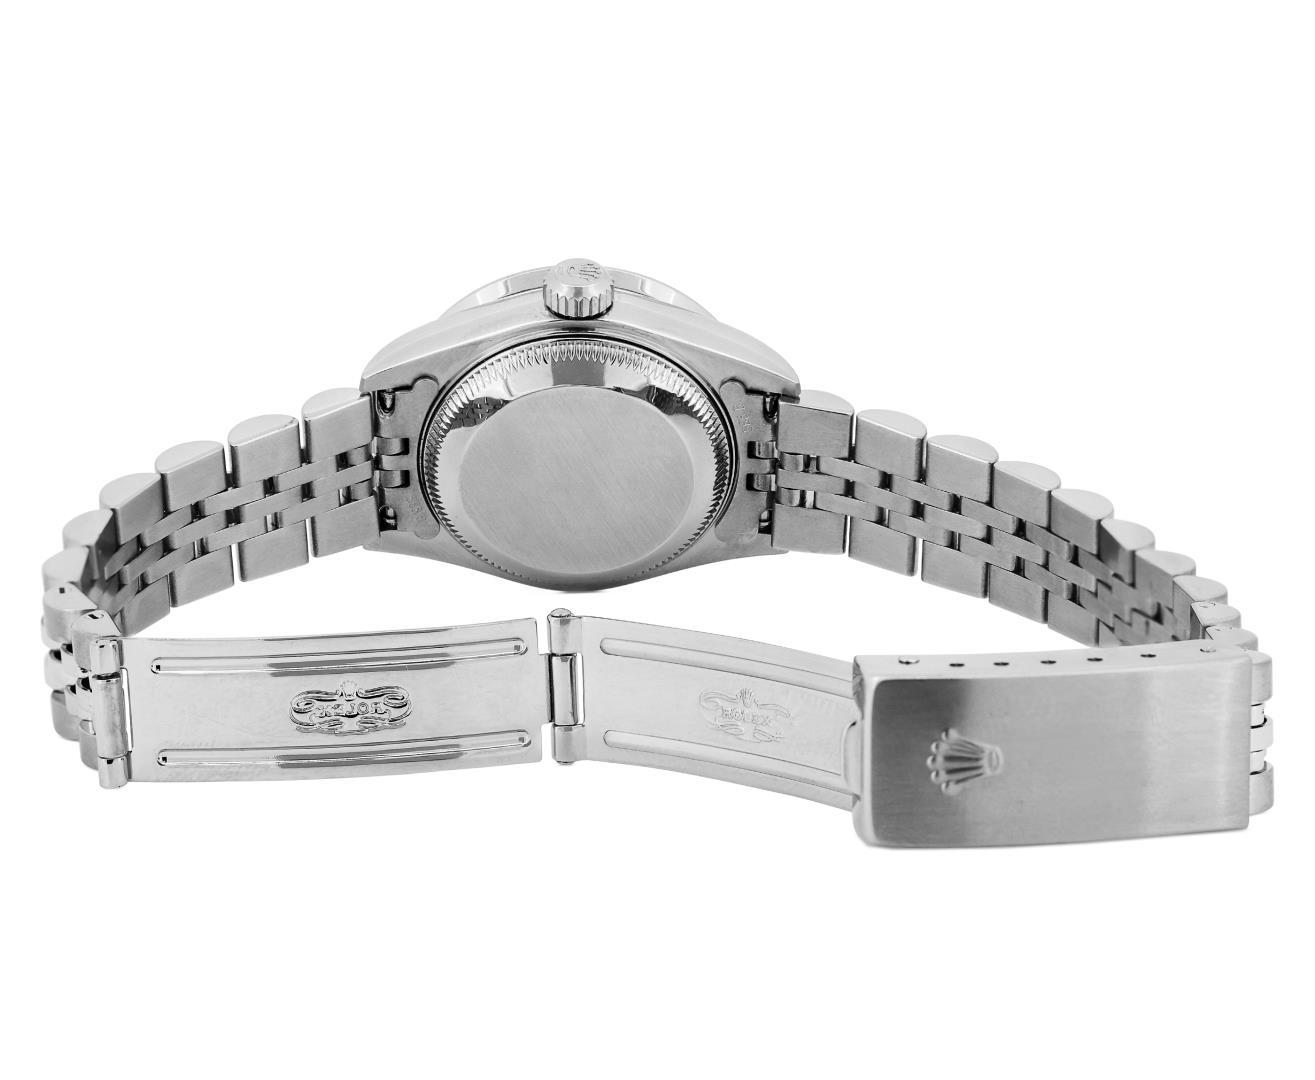 Rolex Ladies Stainless Steel Silver Diamond Date Wristwatch